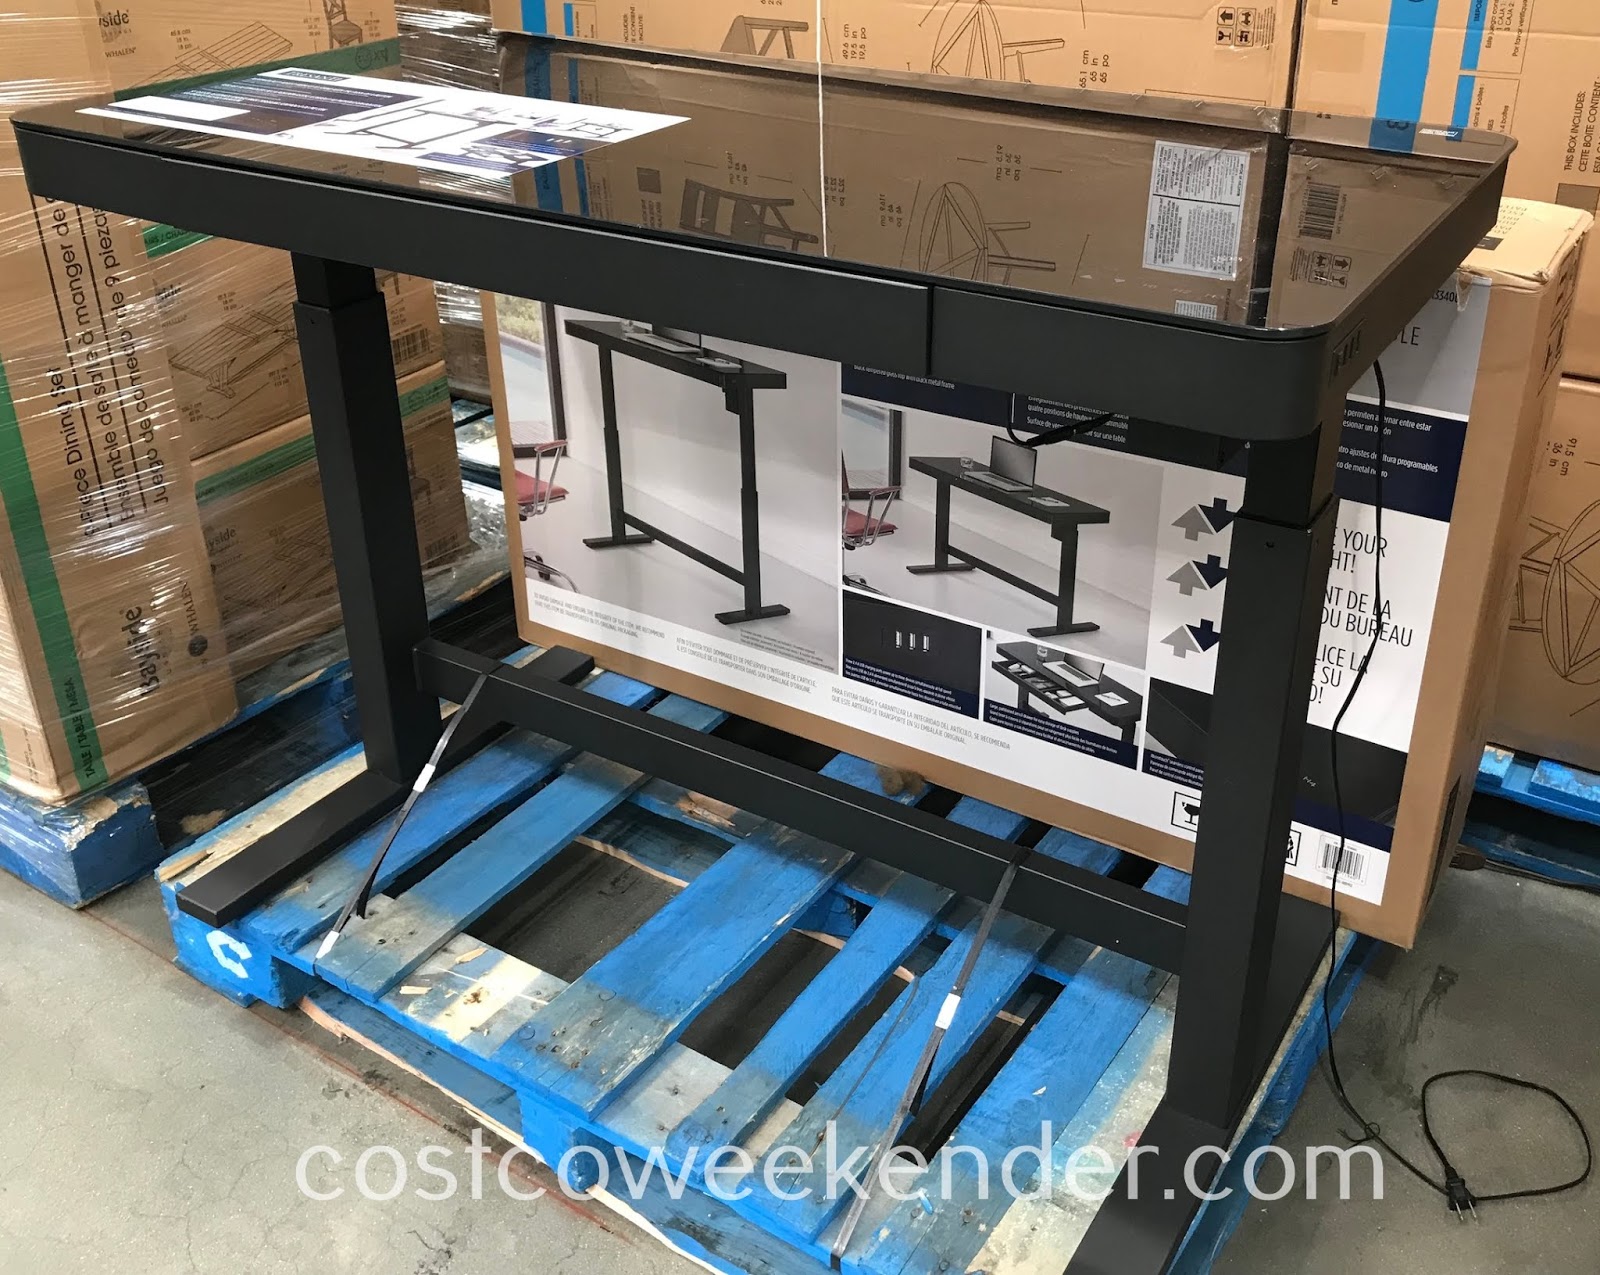 Tresanti Adjustable Height Desk Costco Weekender